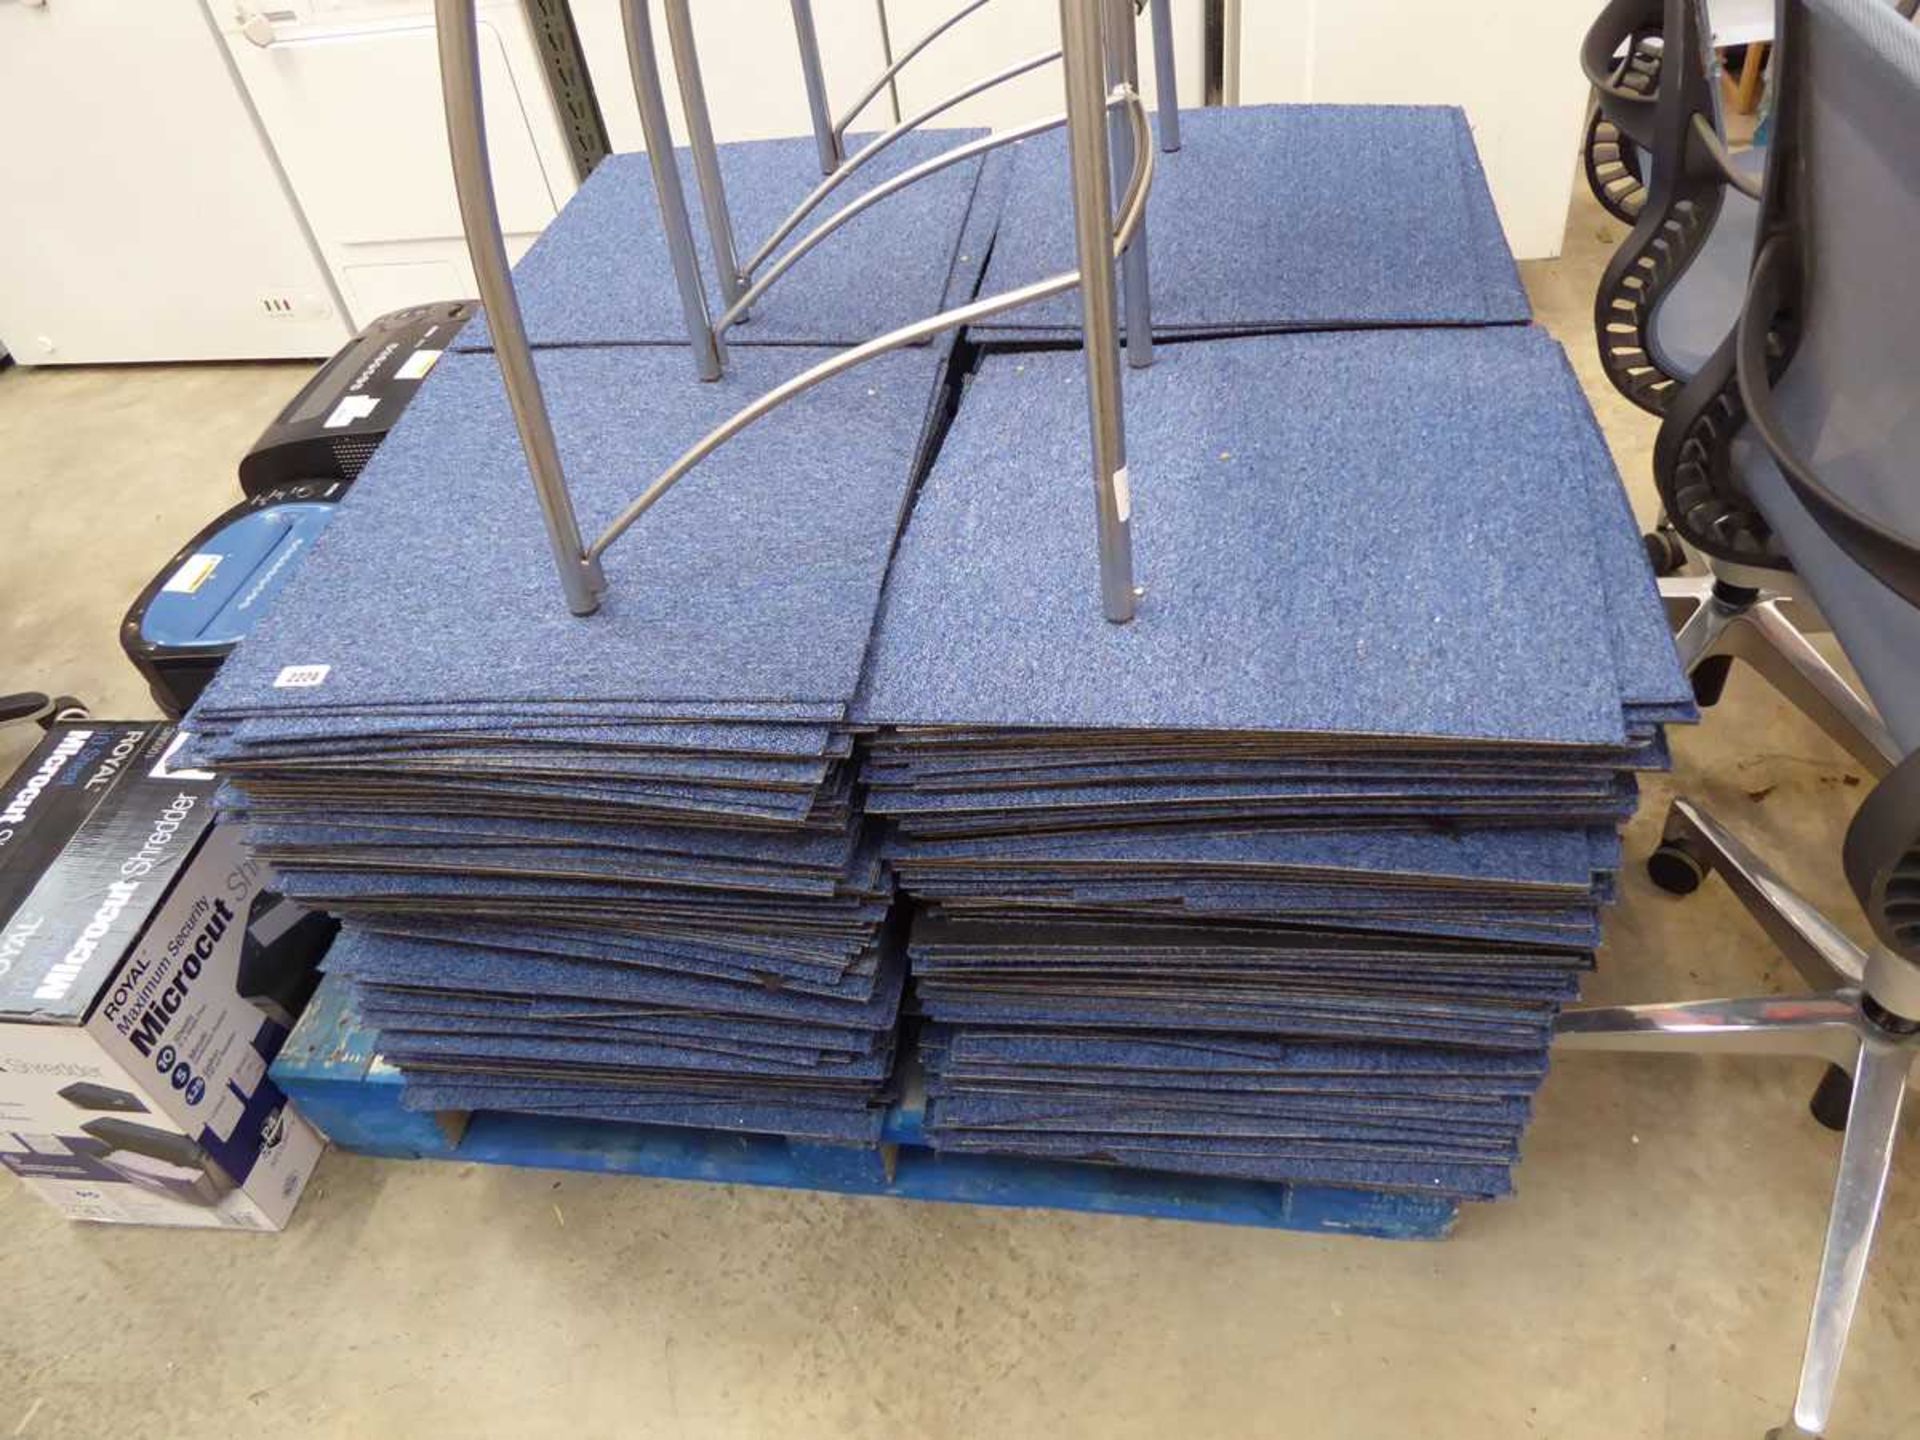 Pallet containing a large quantity of blue coloured carpet tiles